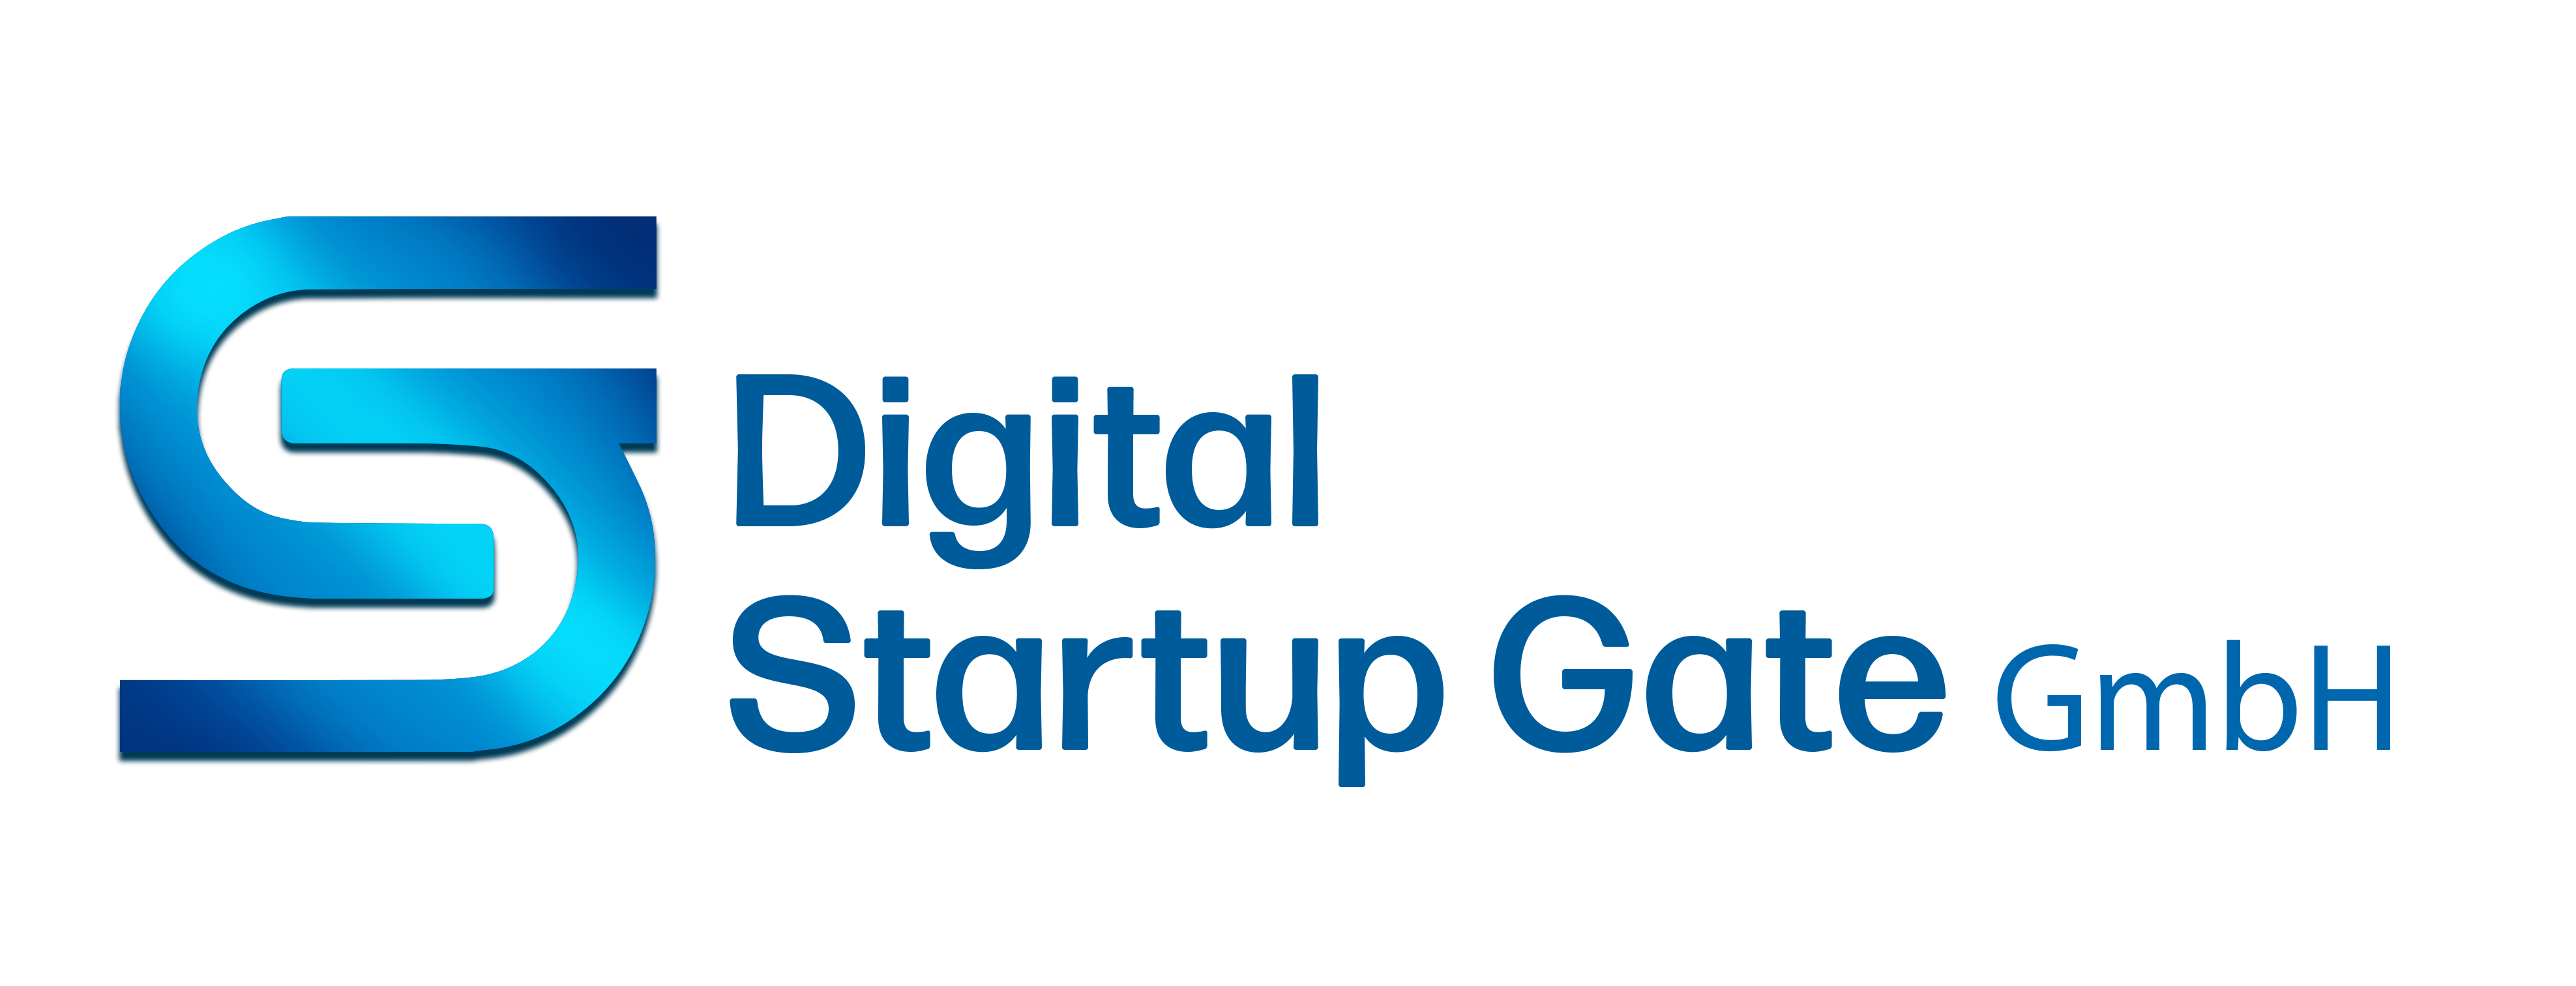 Digital Startup Gate